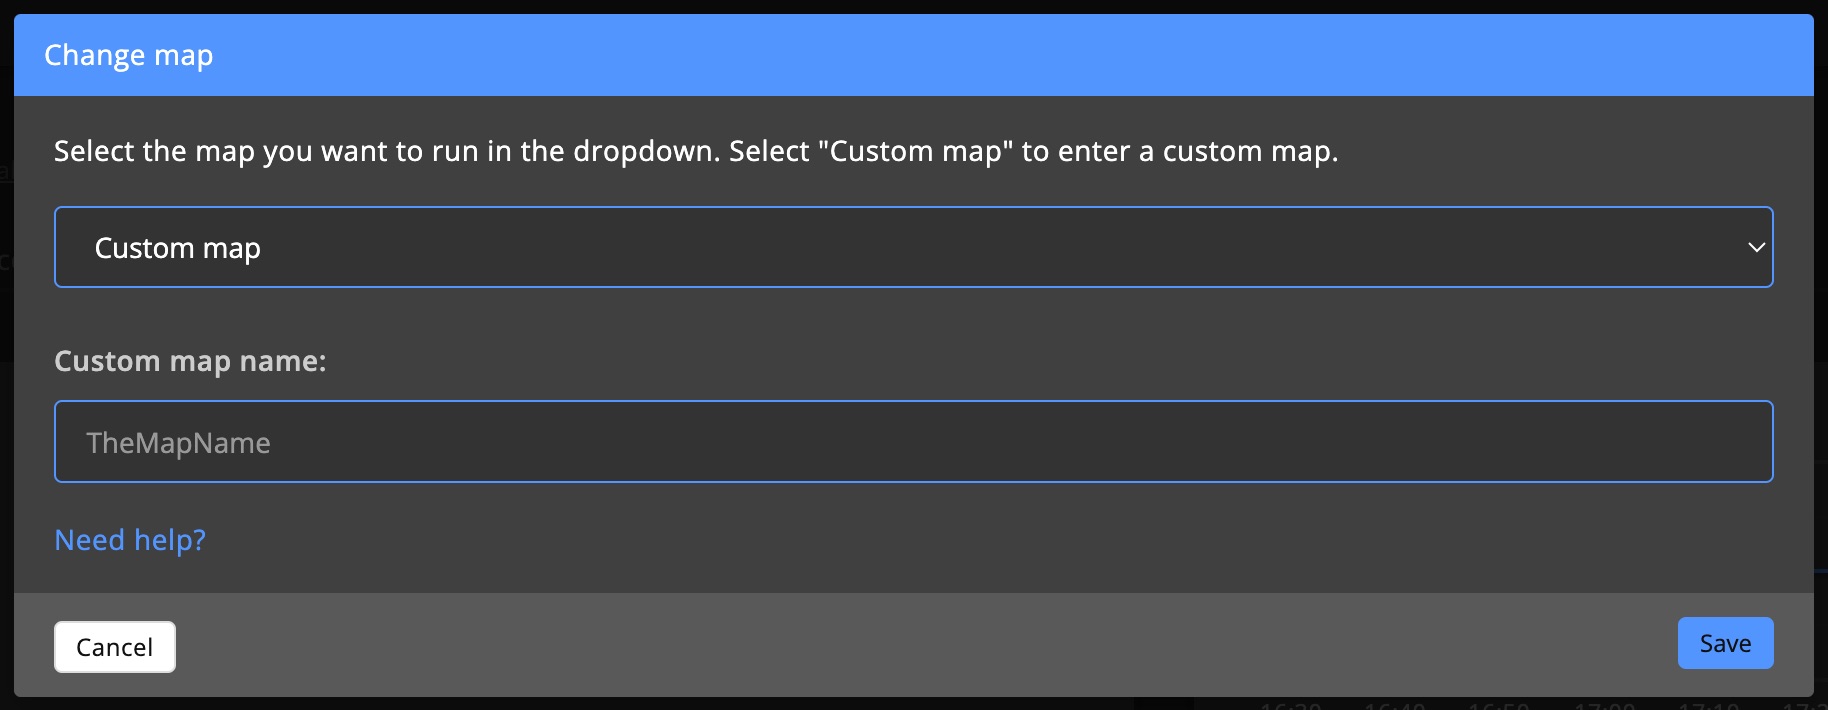 Game server - custom map